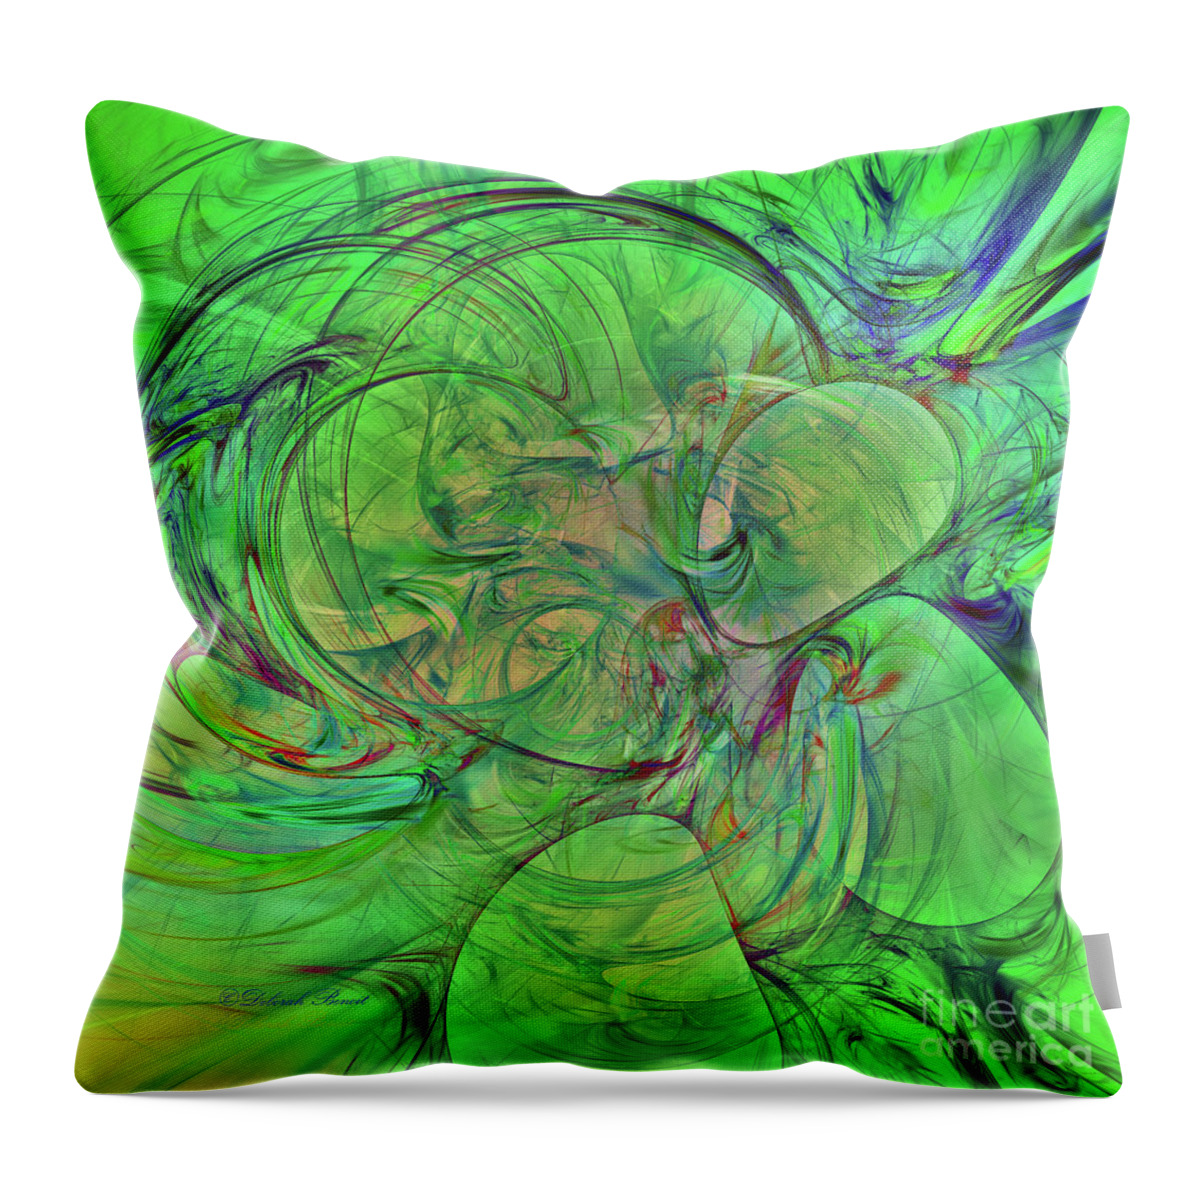 Abstract Throw Pillow featuring the digital art Green World Abstract by Deborah Benoit